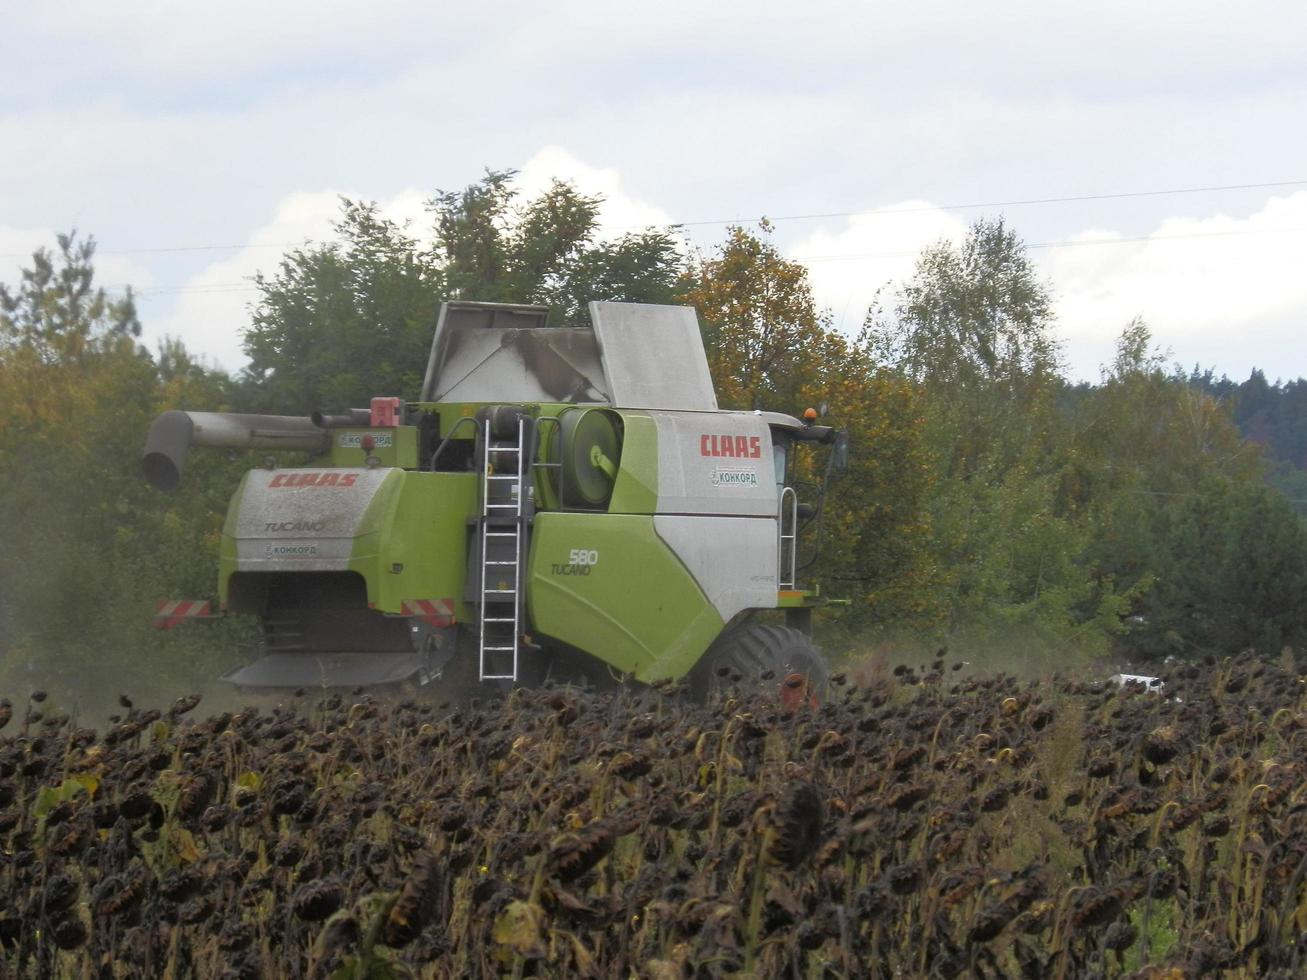 KYIV OBLAST, UKRAINE - OCTOBER 02, 2022 Combine harvester mows and harvests photo